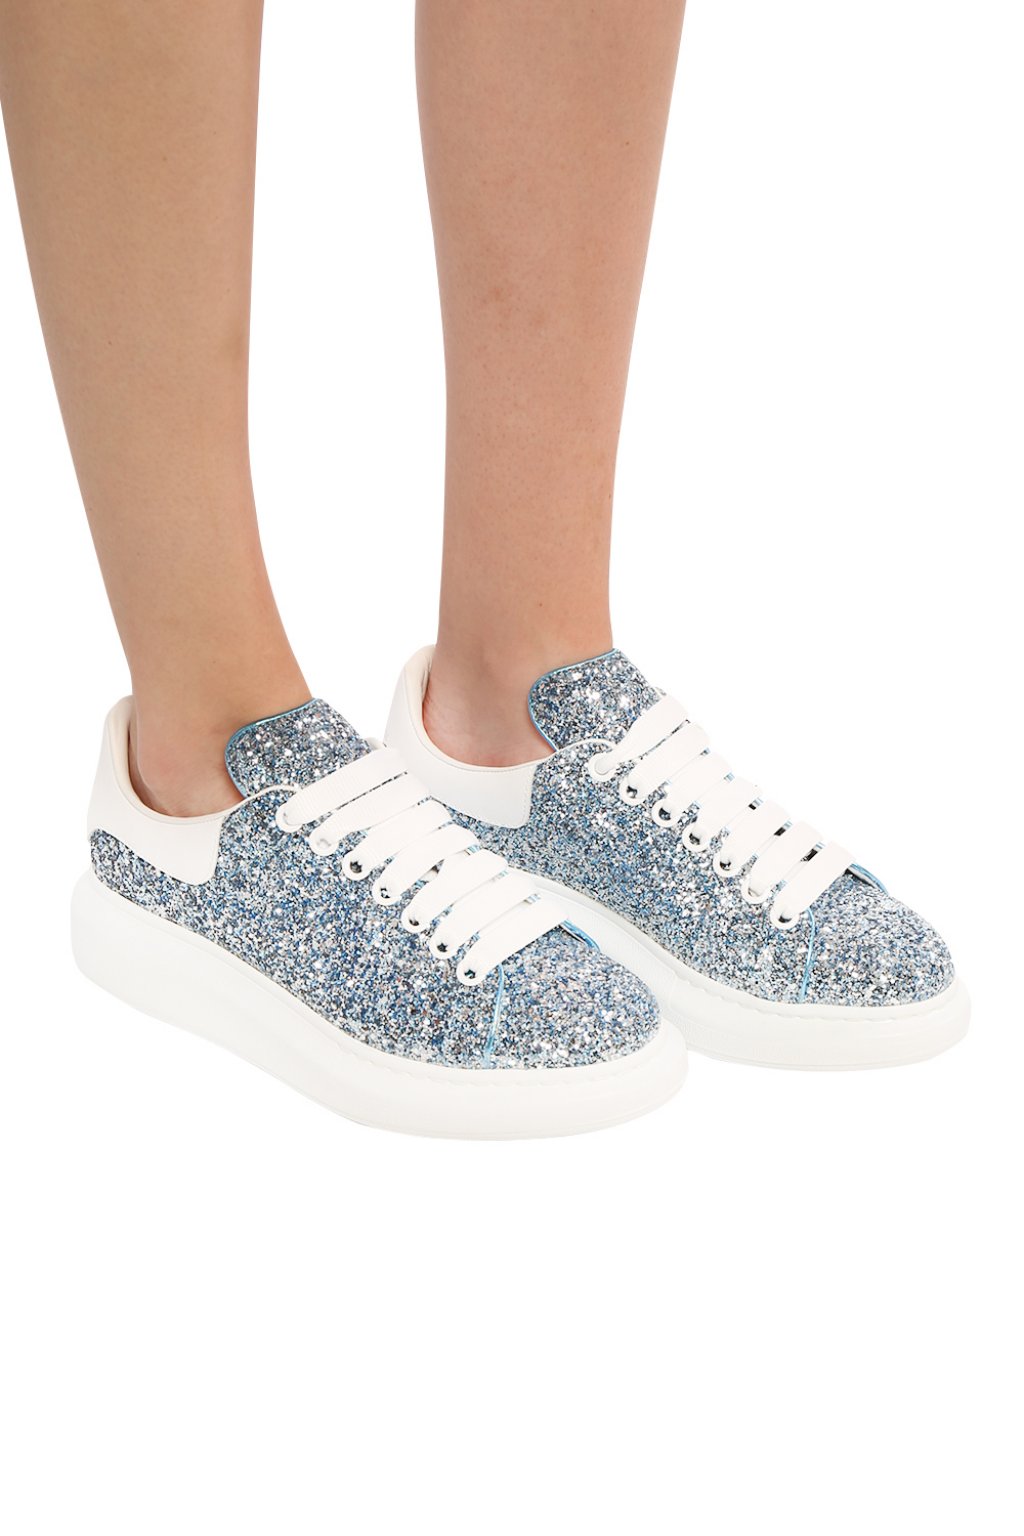 alexander mcqueen sneakers blue glitter